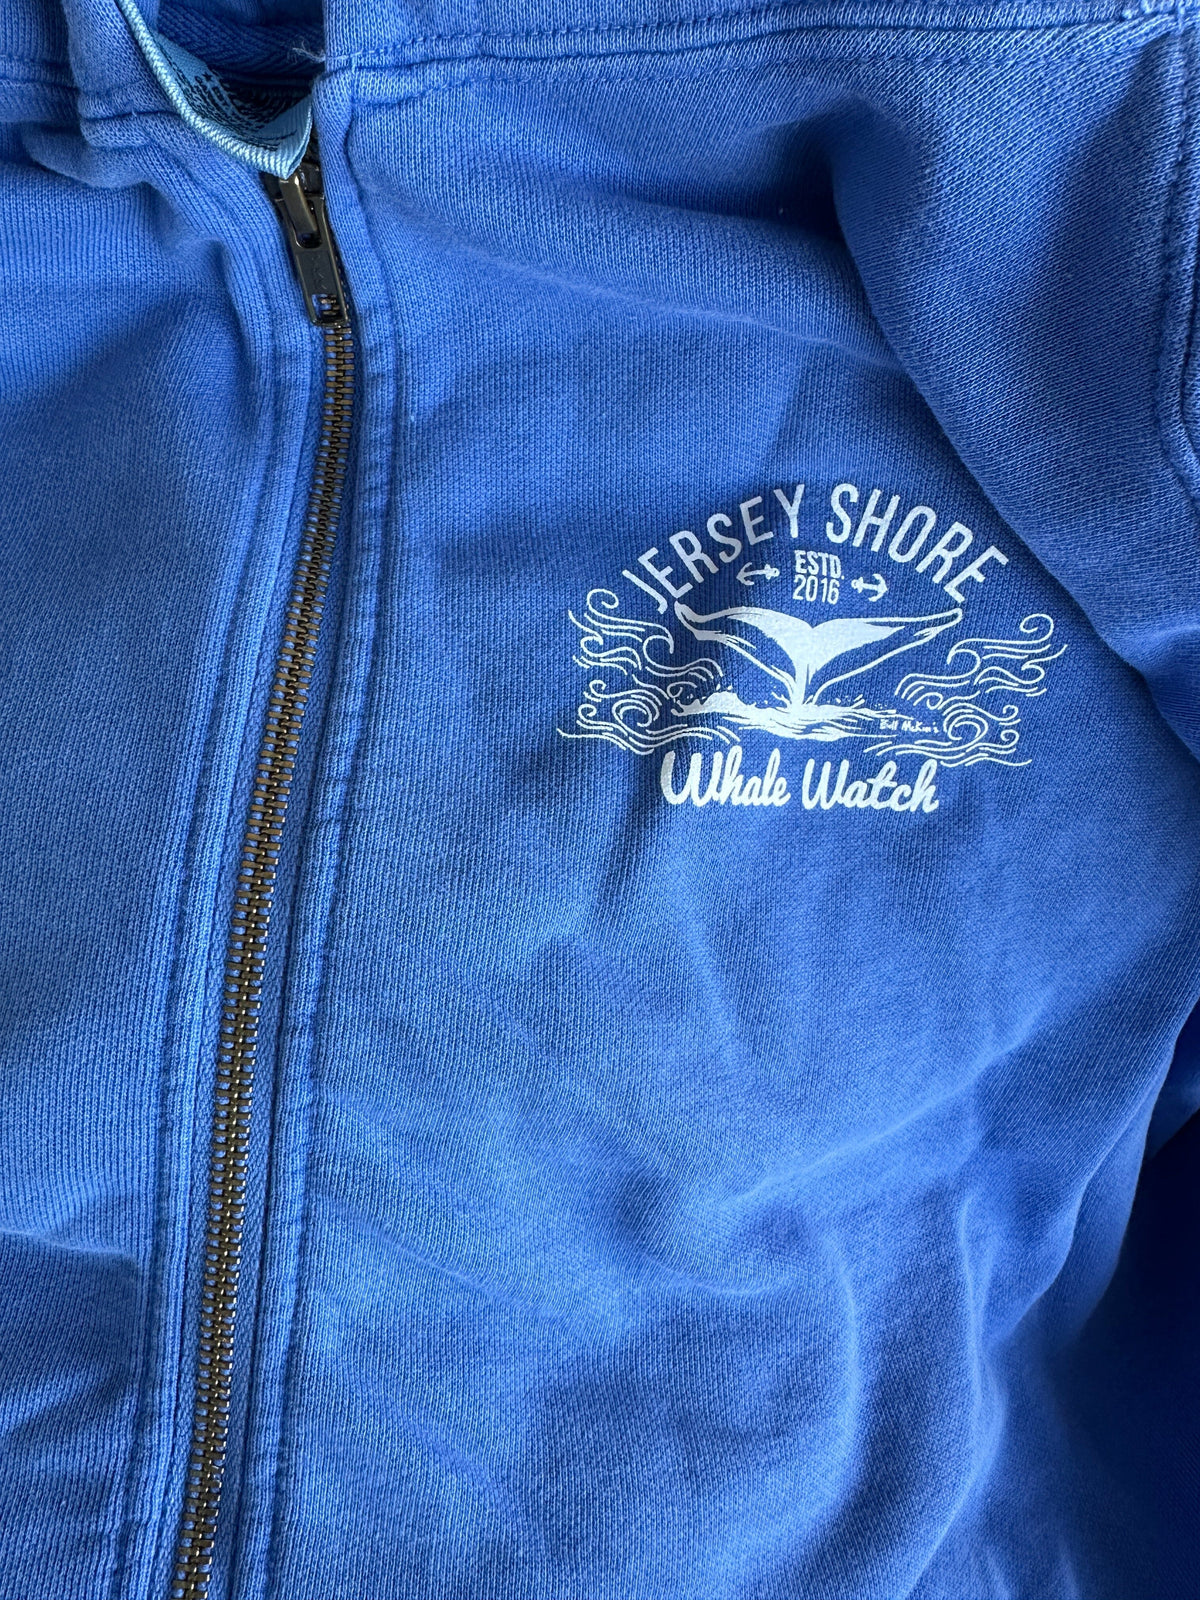 Adult Hooded Sweatshirt 2023 Bill McKim Photography -Jersey Shore whale watch tours 